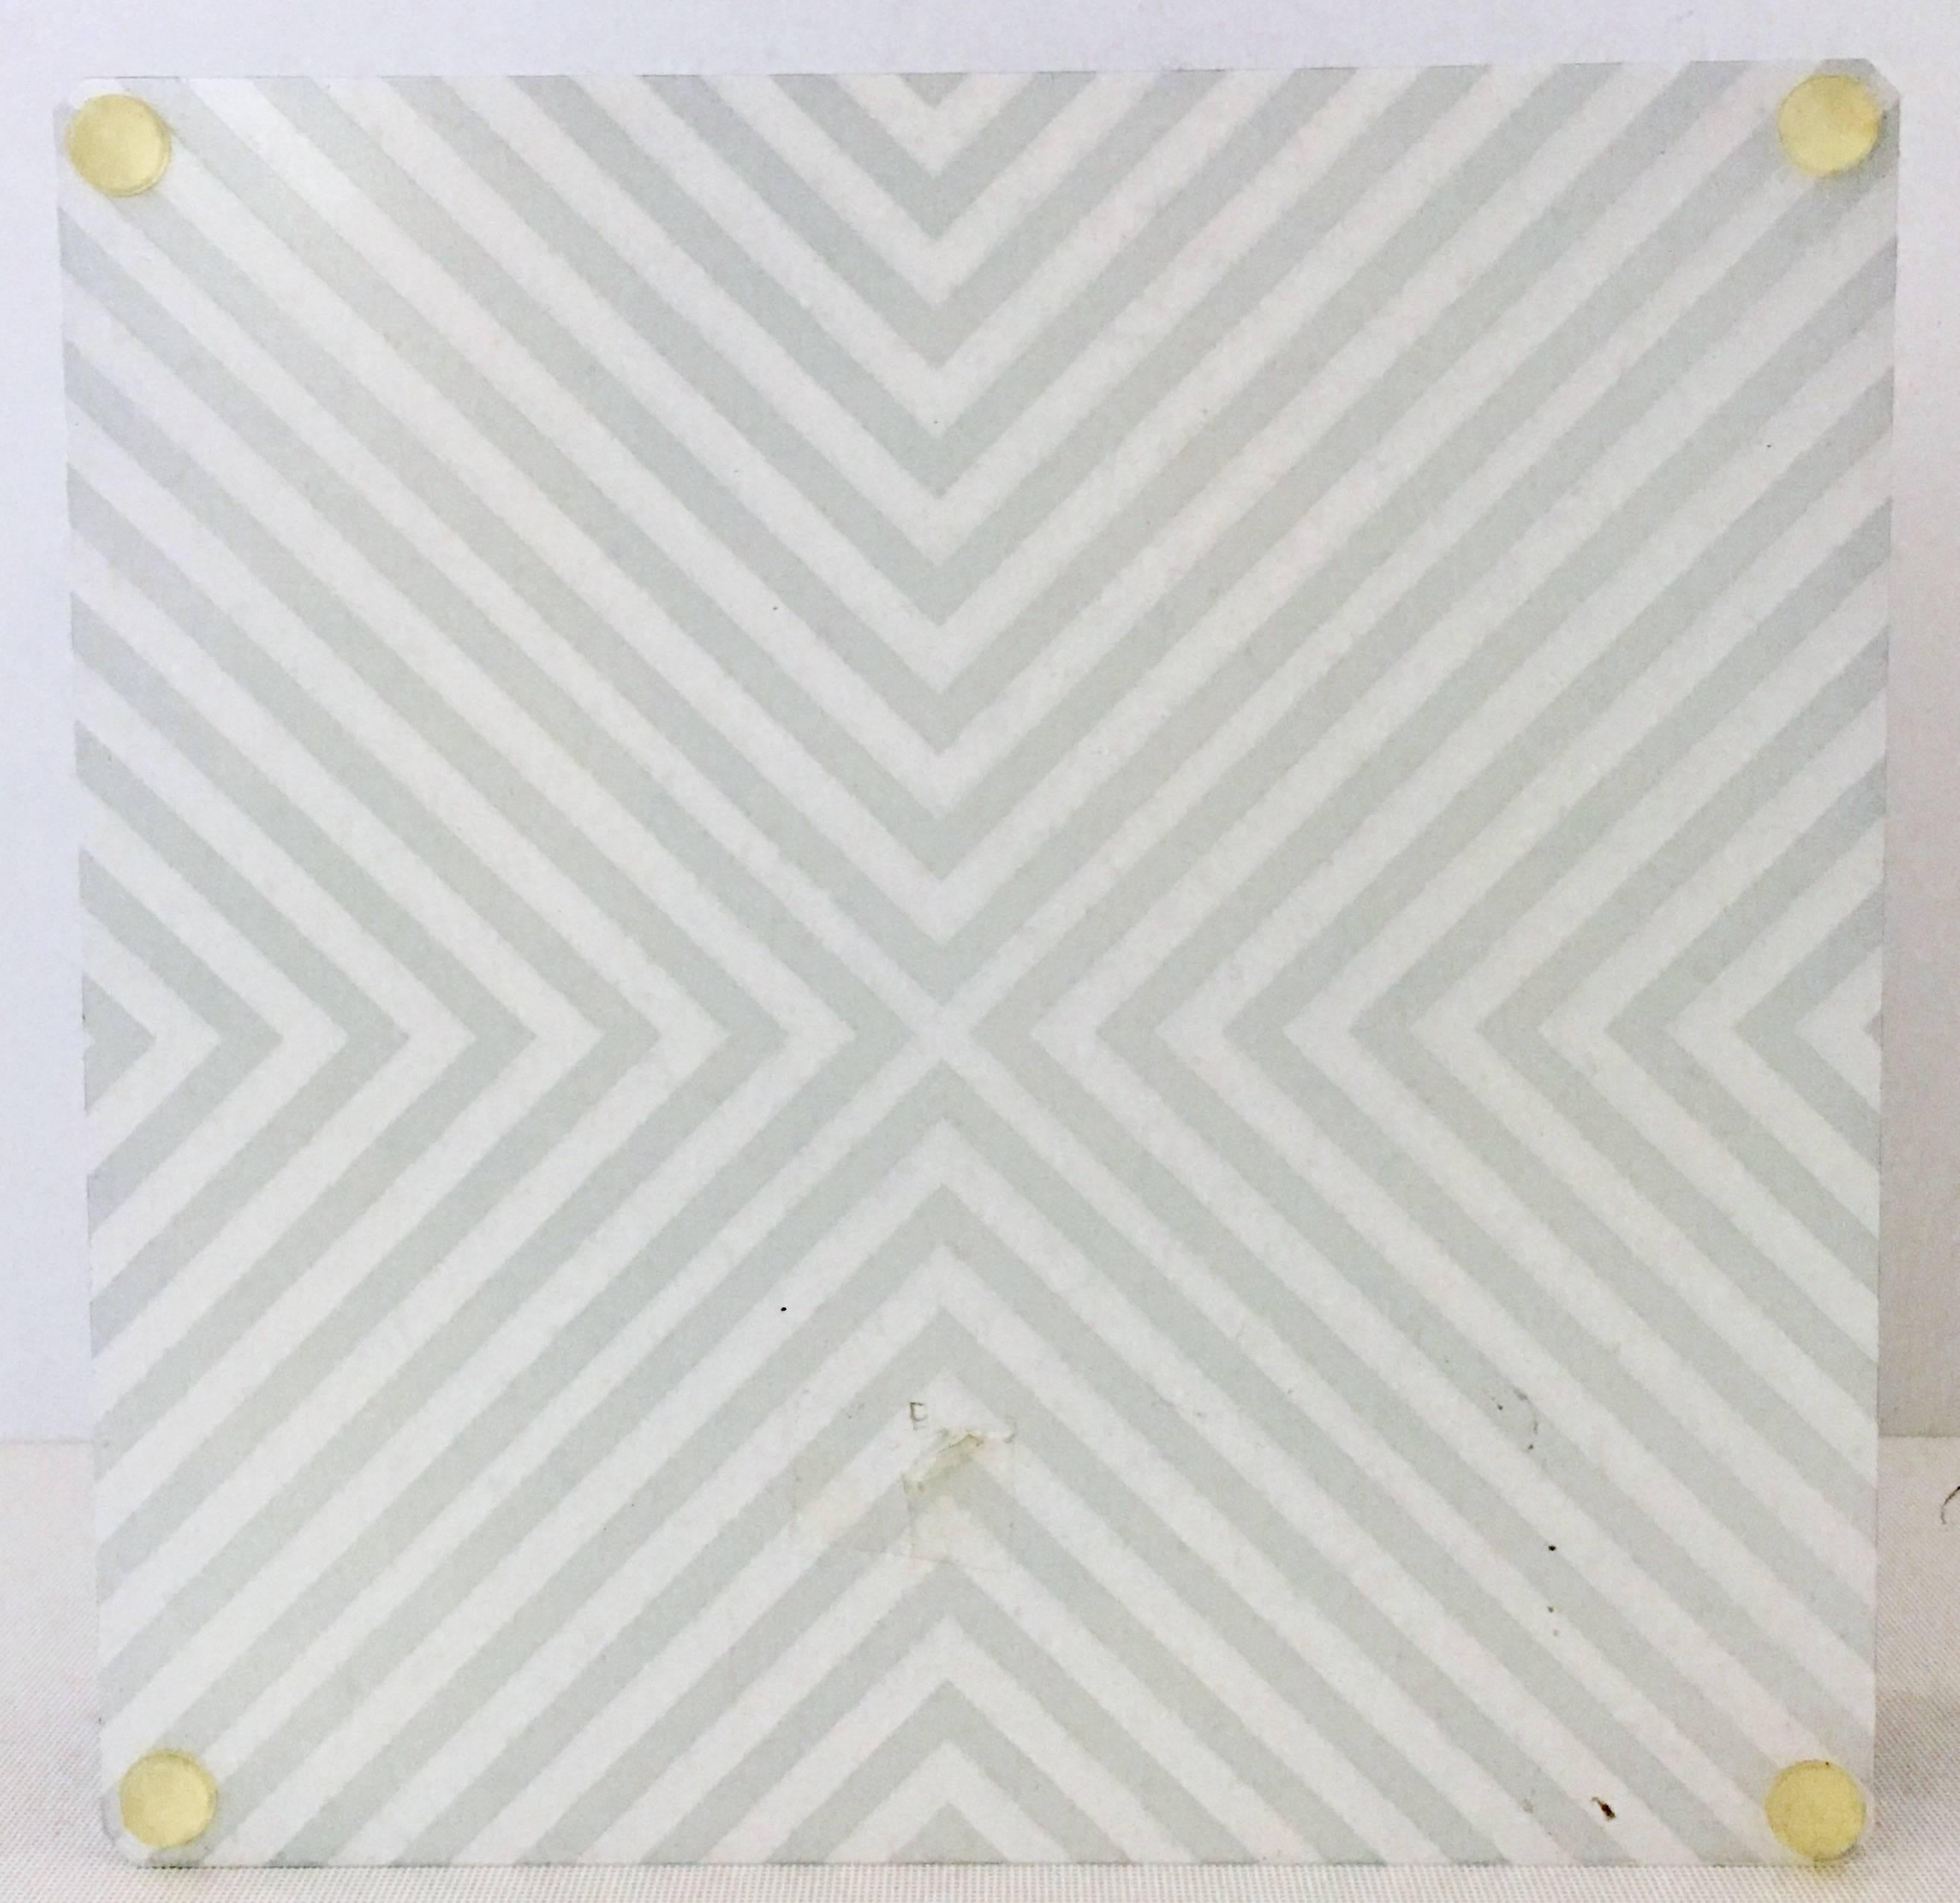 Lucite Optic Zebra Print Square Bowl by, Alexandra Von Furstenberg 5